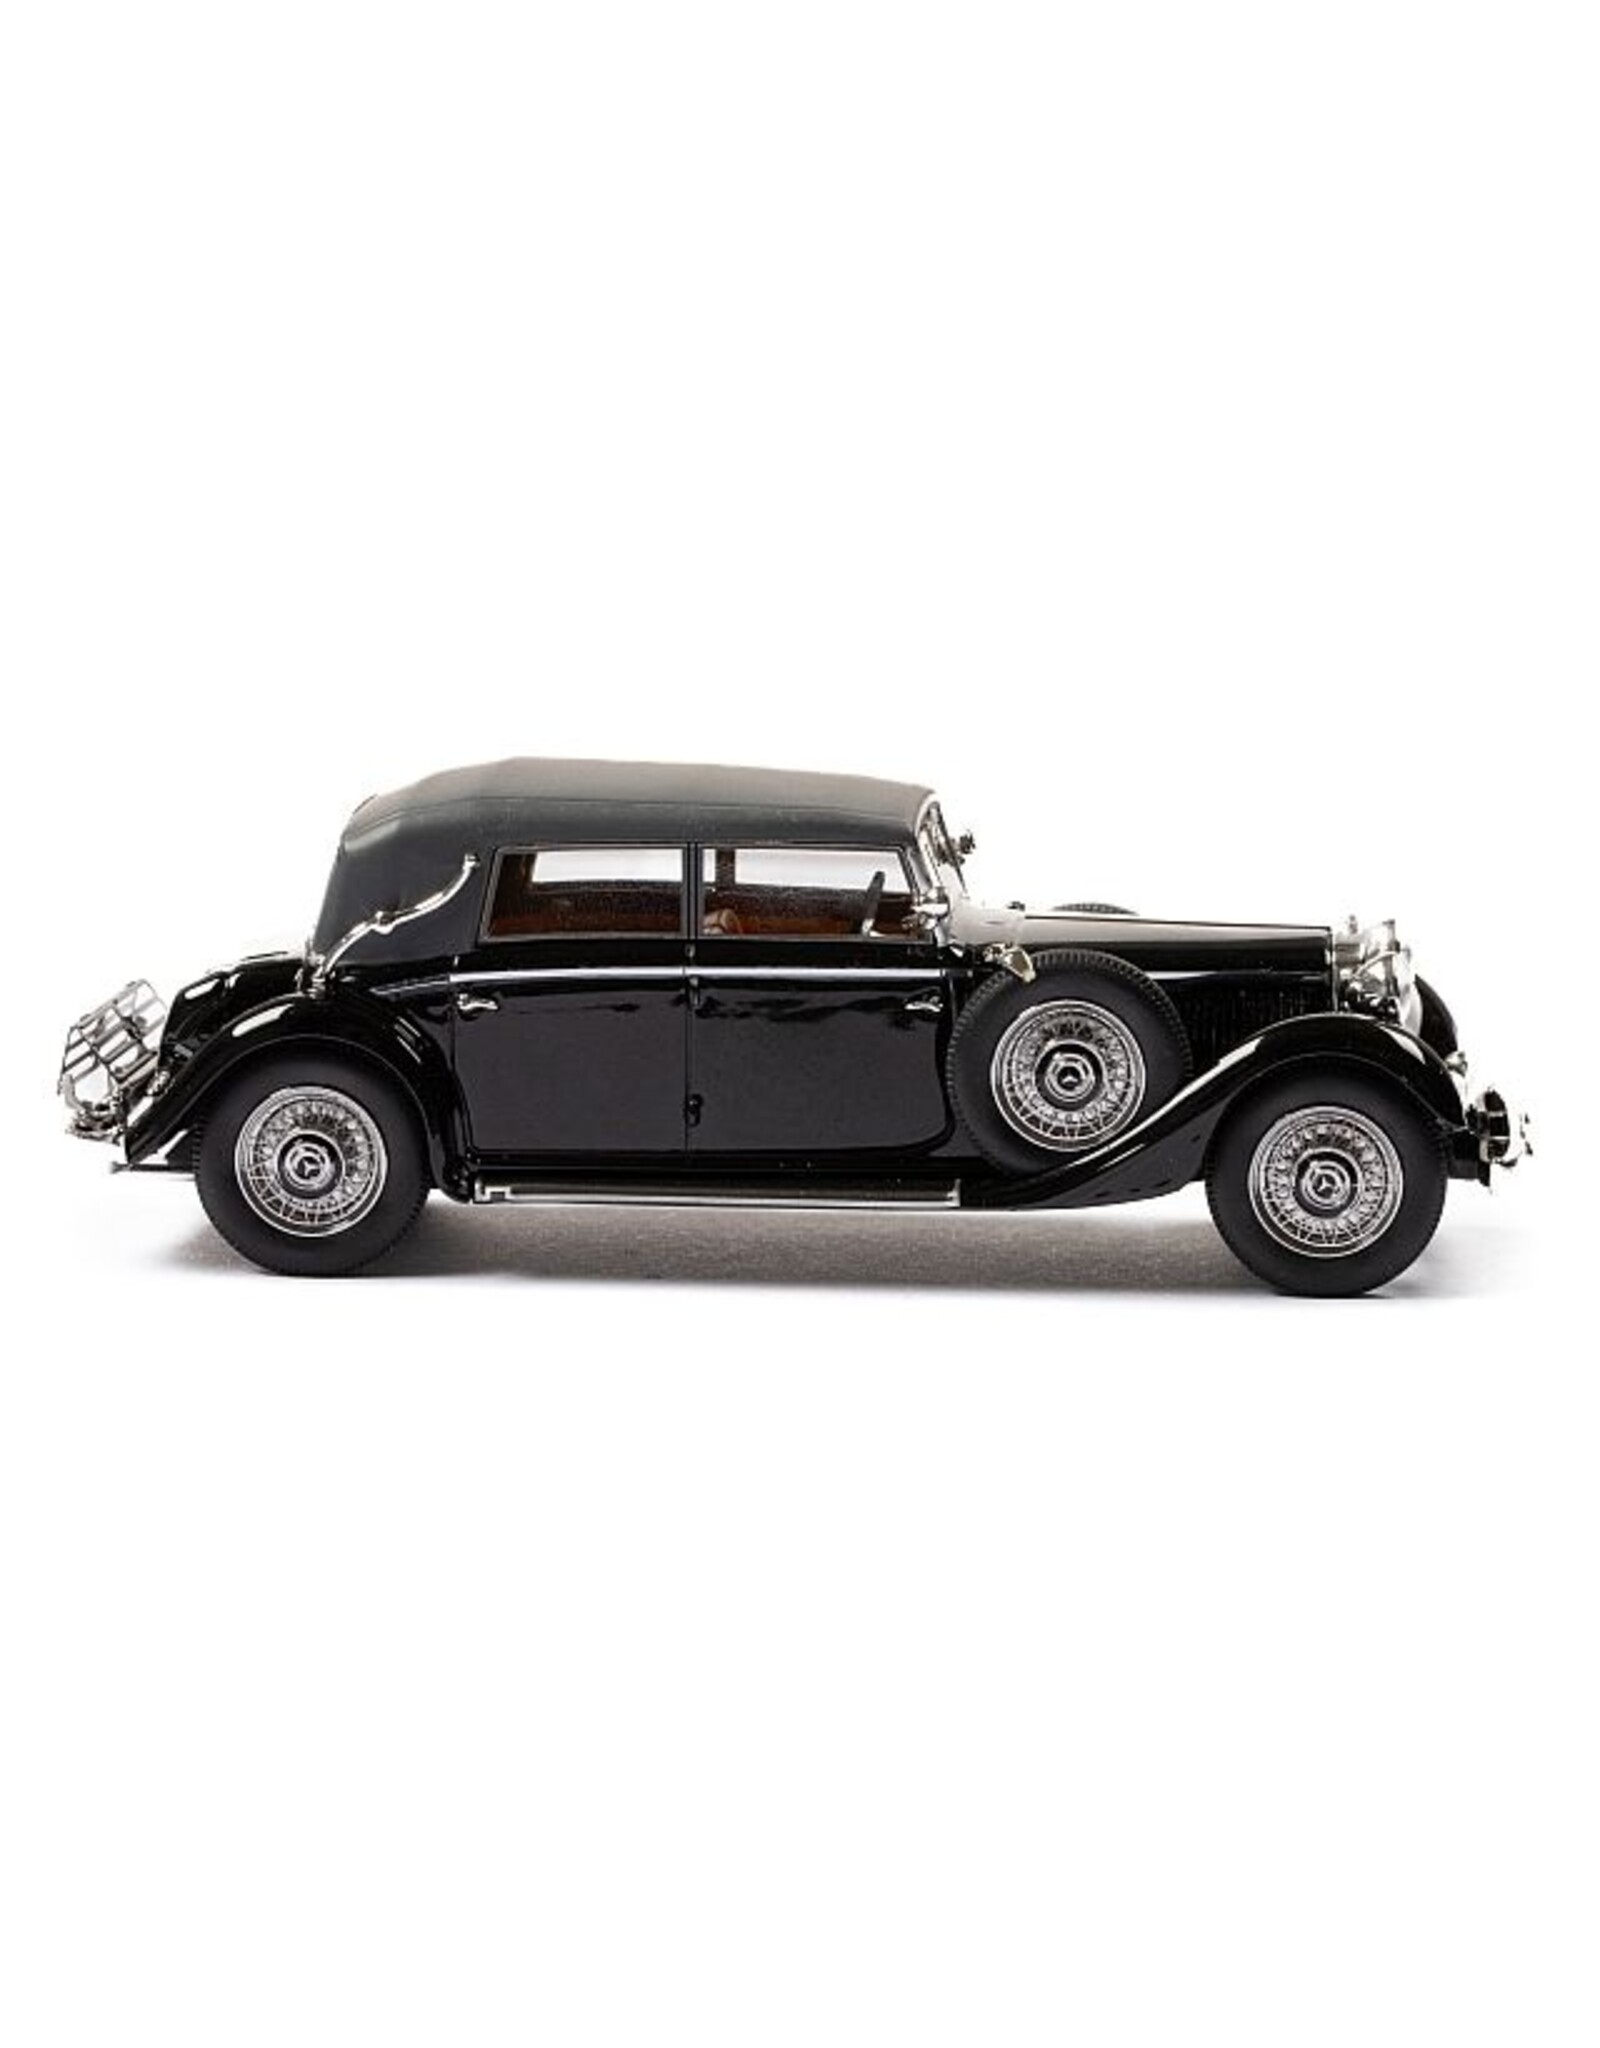 Mercedes-Benz Mercedes-Benz 290(W18)1933-36 cabriolet D-long wheelbase-closed roof-black